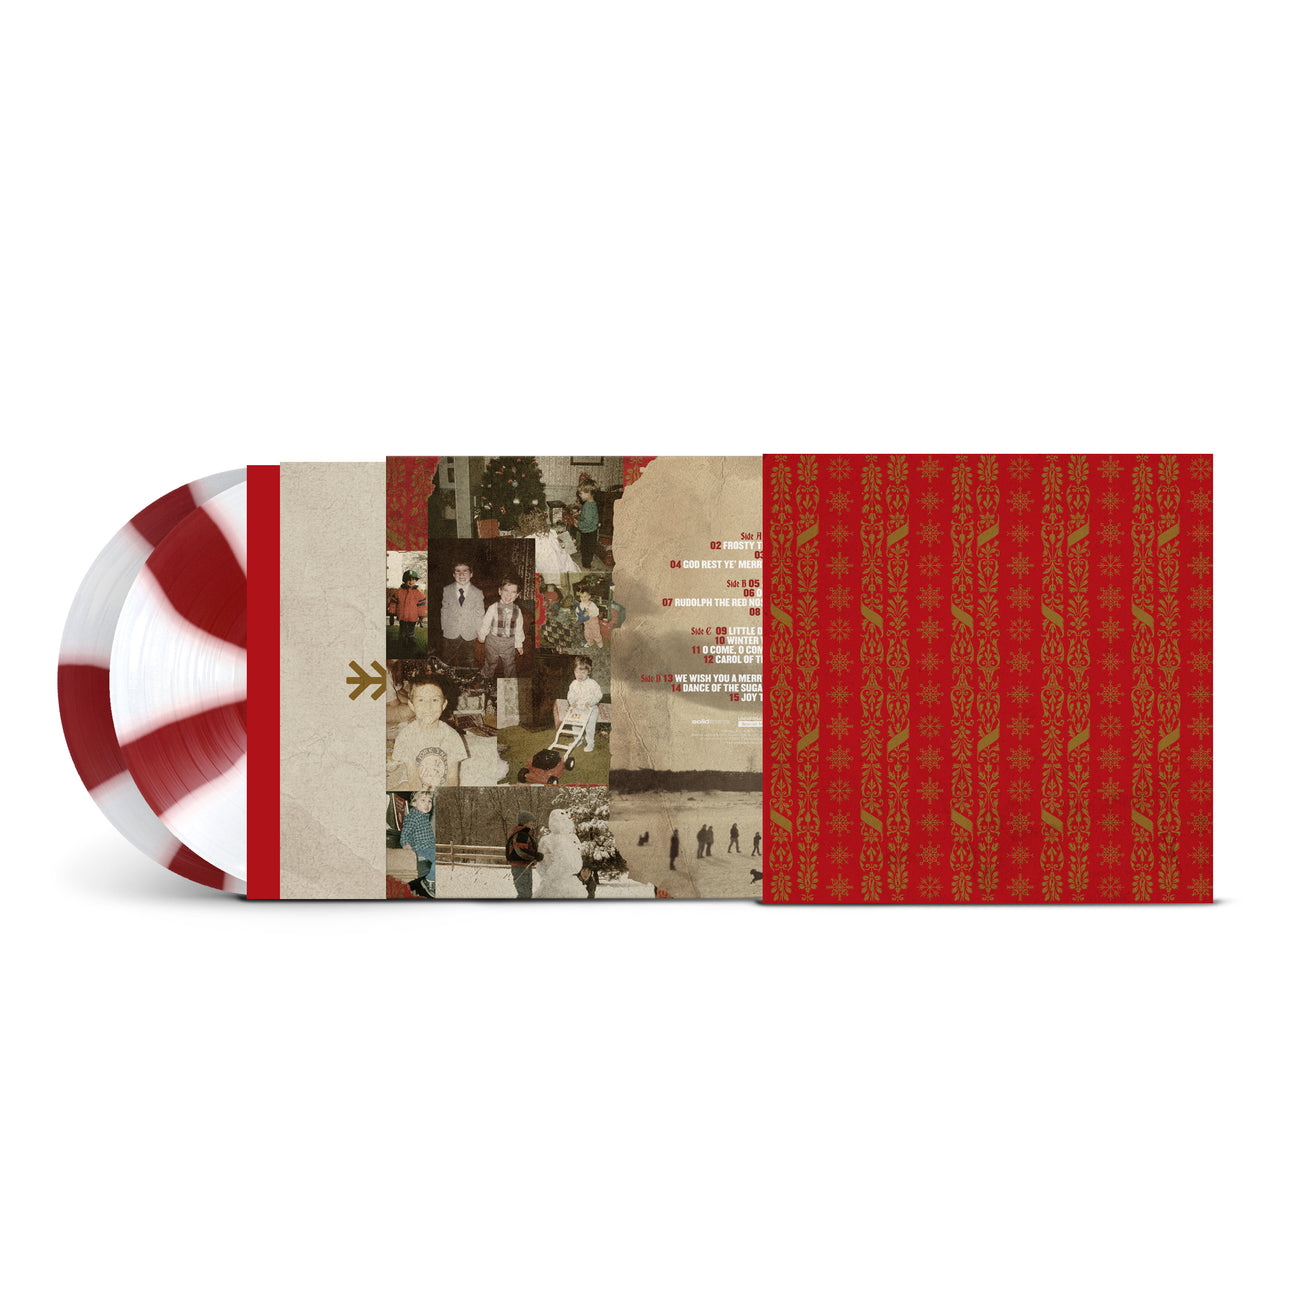 August Burns Red: Sleddin' Hill Vinyl LP (Candy Cane)